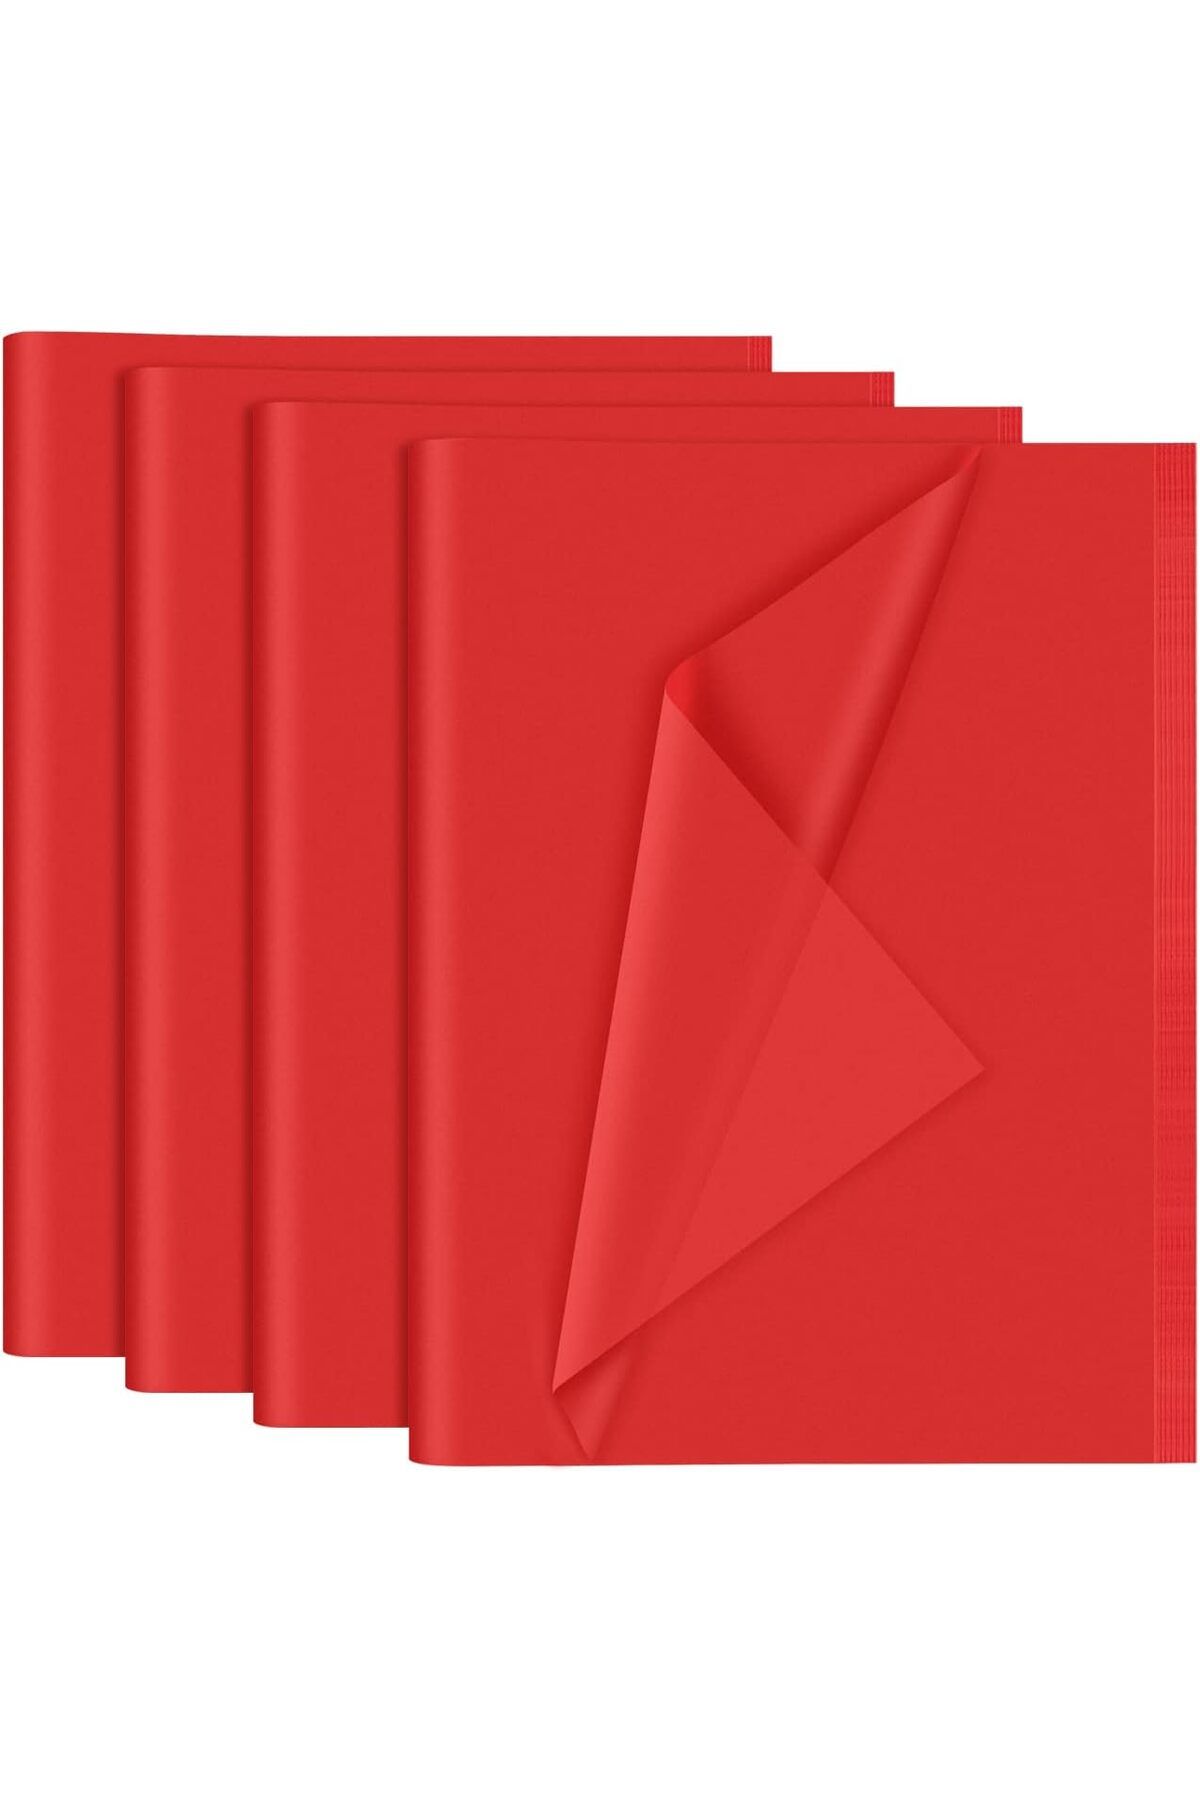 roco paper Pelur Kağıt - 20x30 Cm A4 - 100 Adet Kırmızı Renk